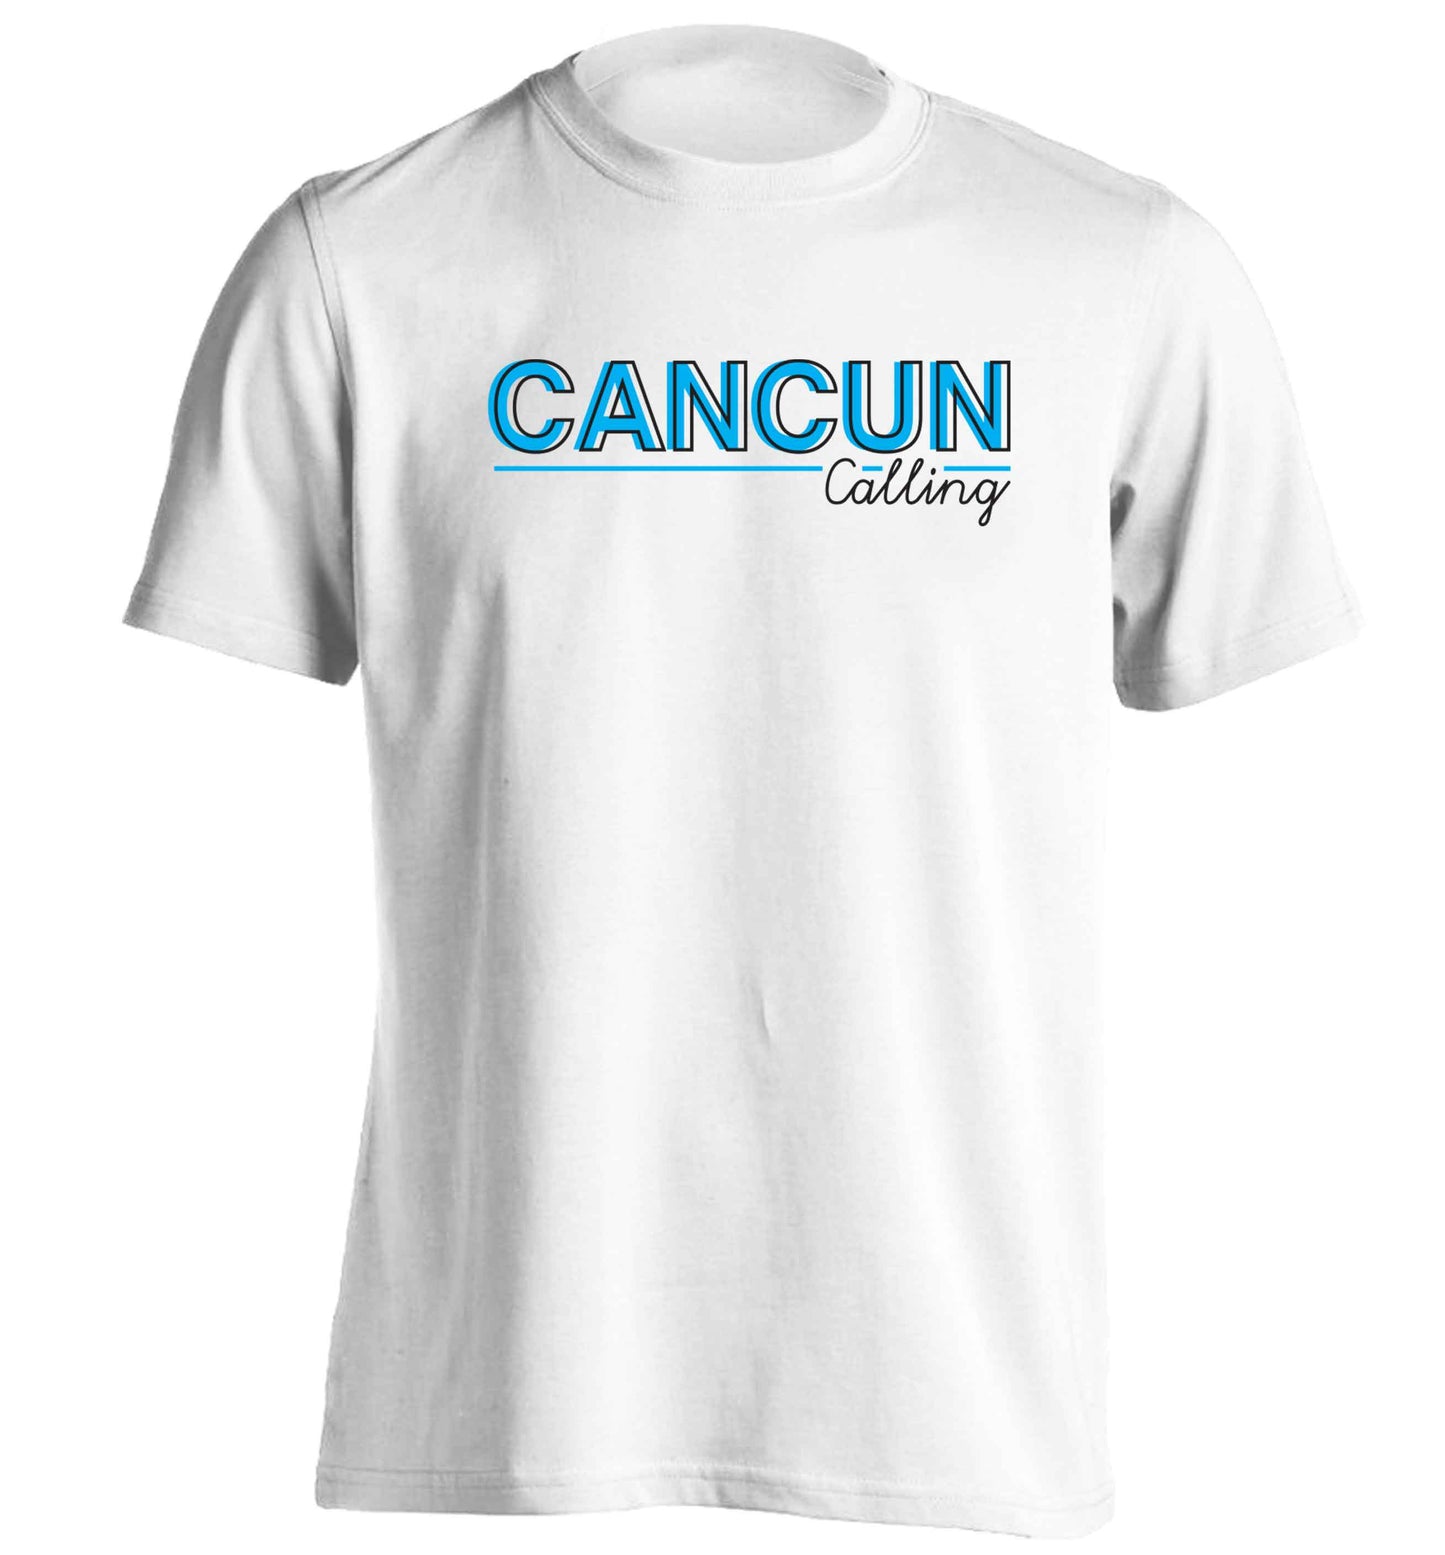 Cancun calling adults unisex white Tshirt 2XL